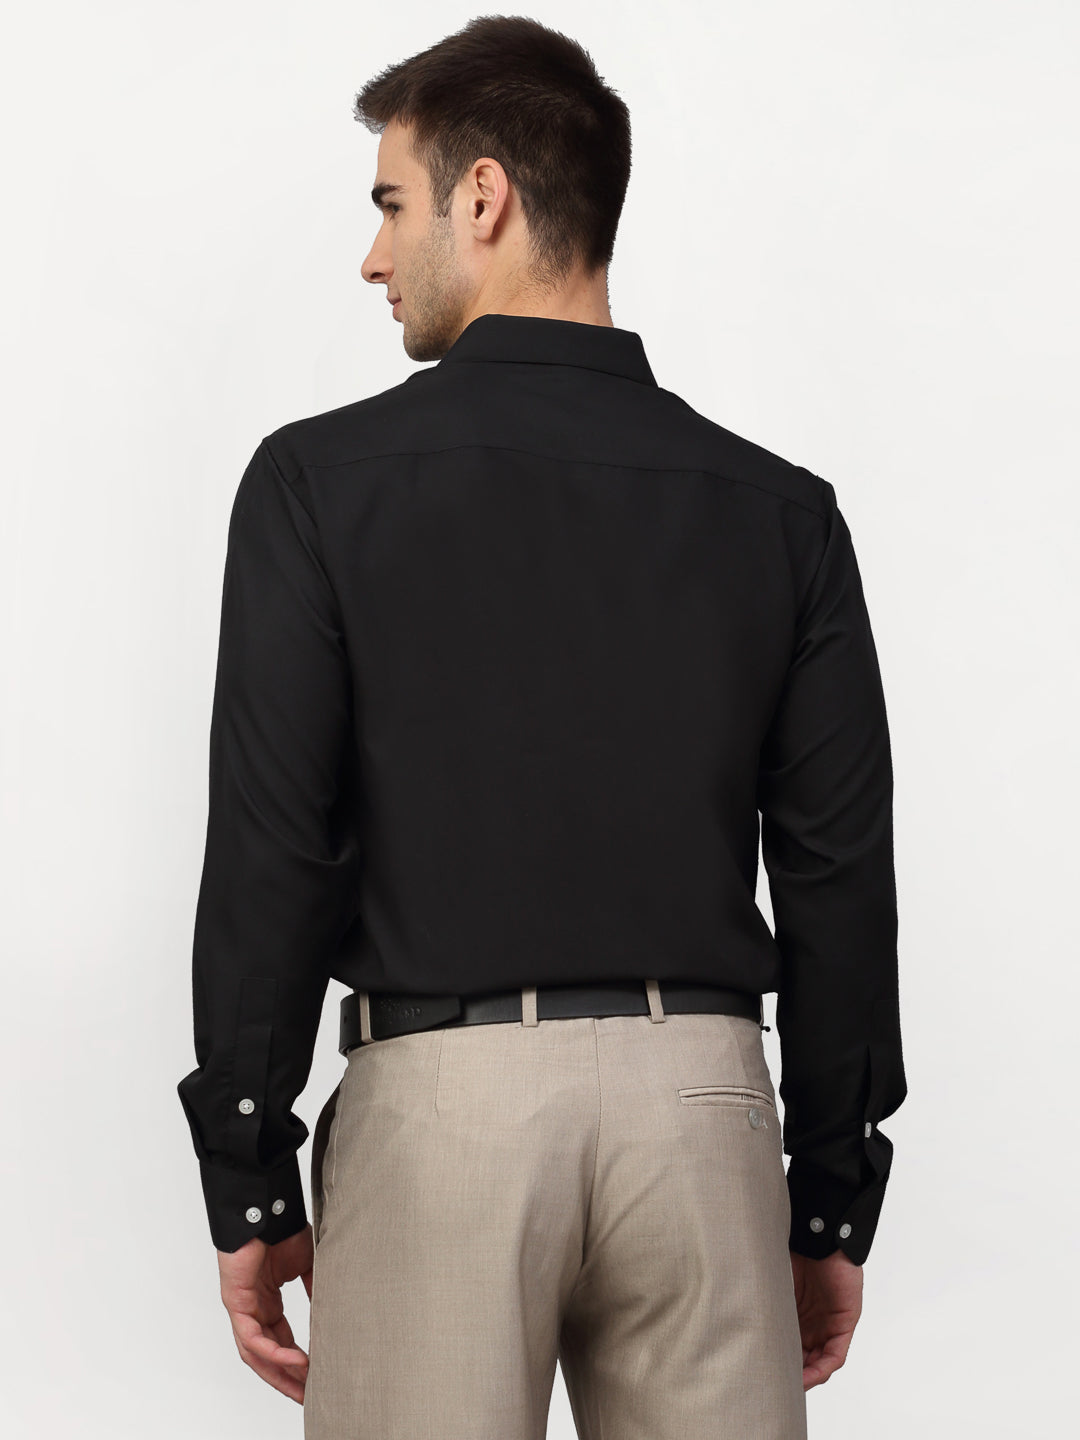 Men's Black Solid Formal Shirts ( SF 777Black ) - Jainish